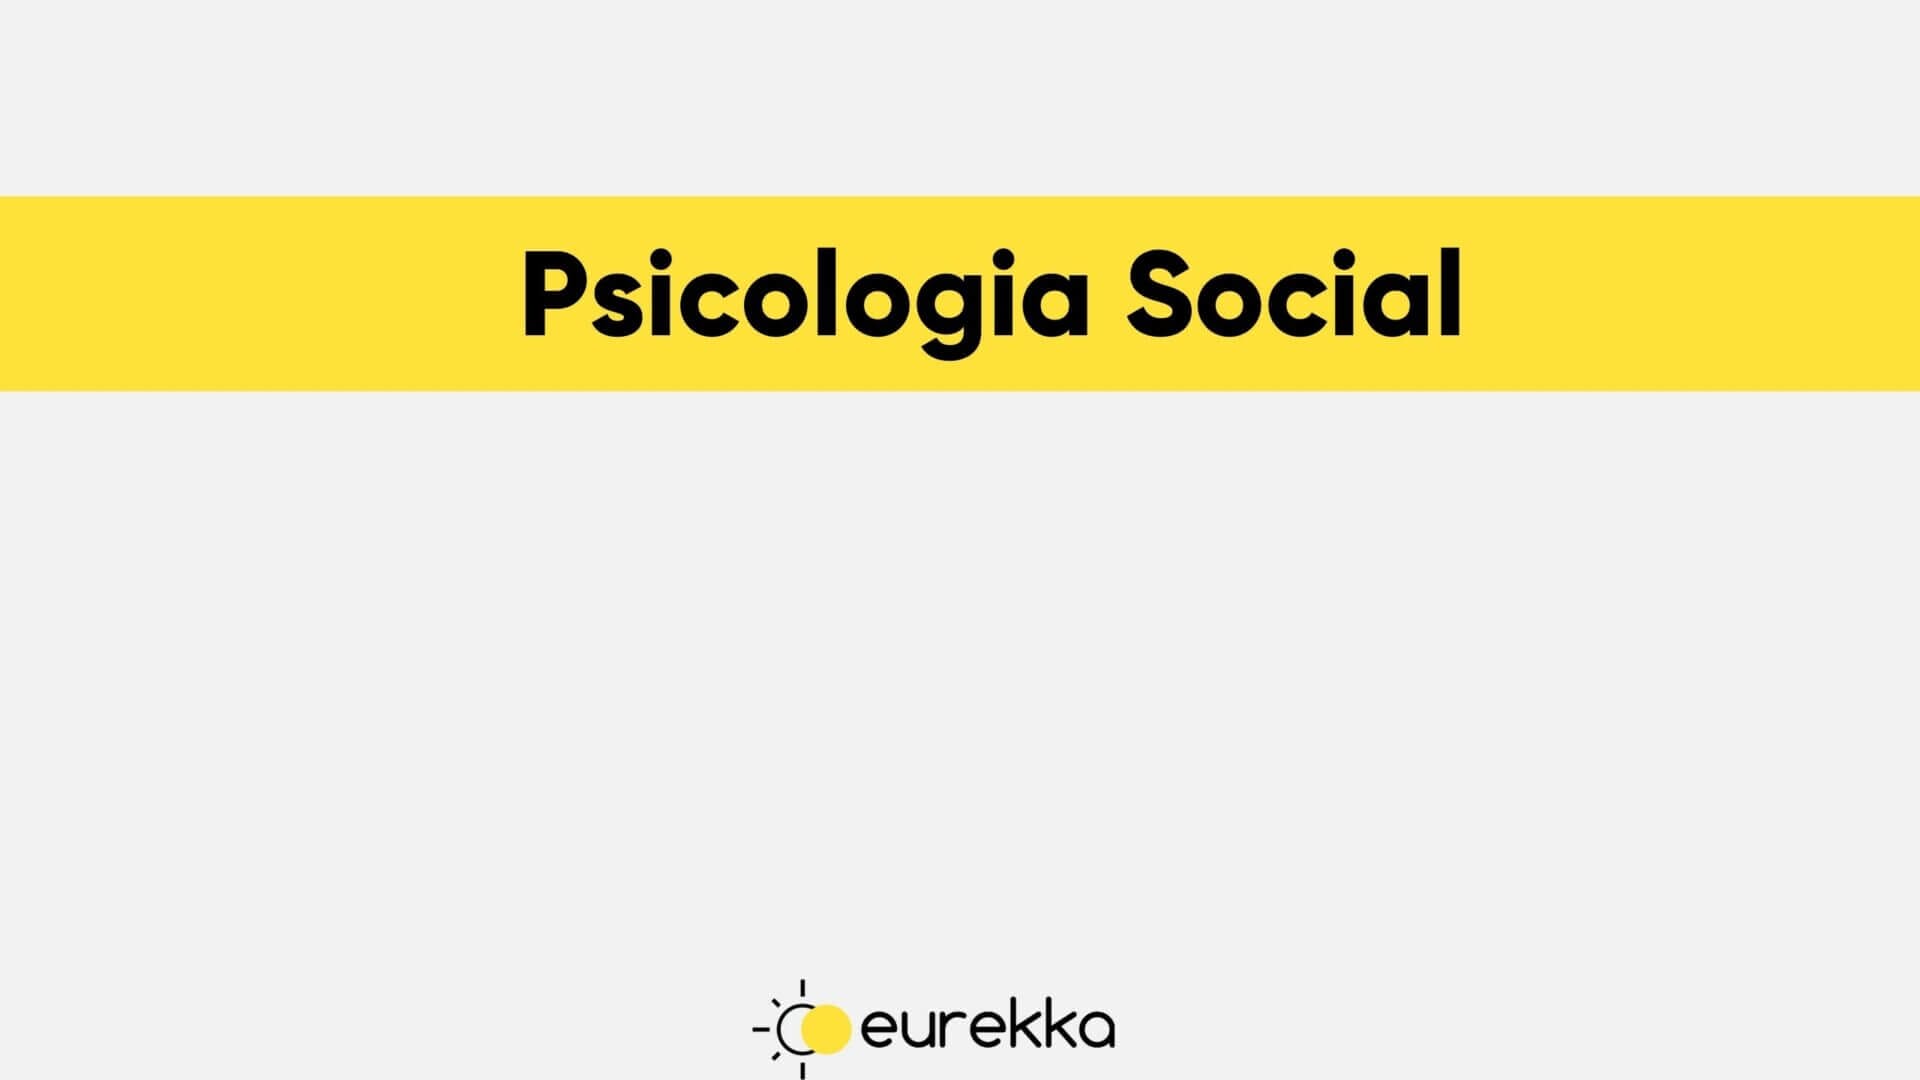 Psicologia social: Saiba tudo sobre essa área da psicologia